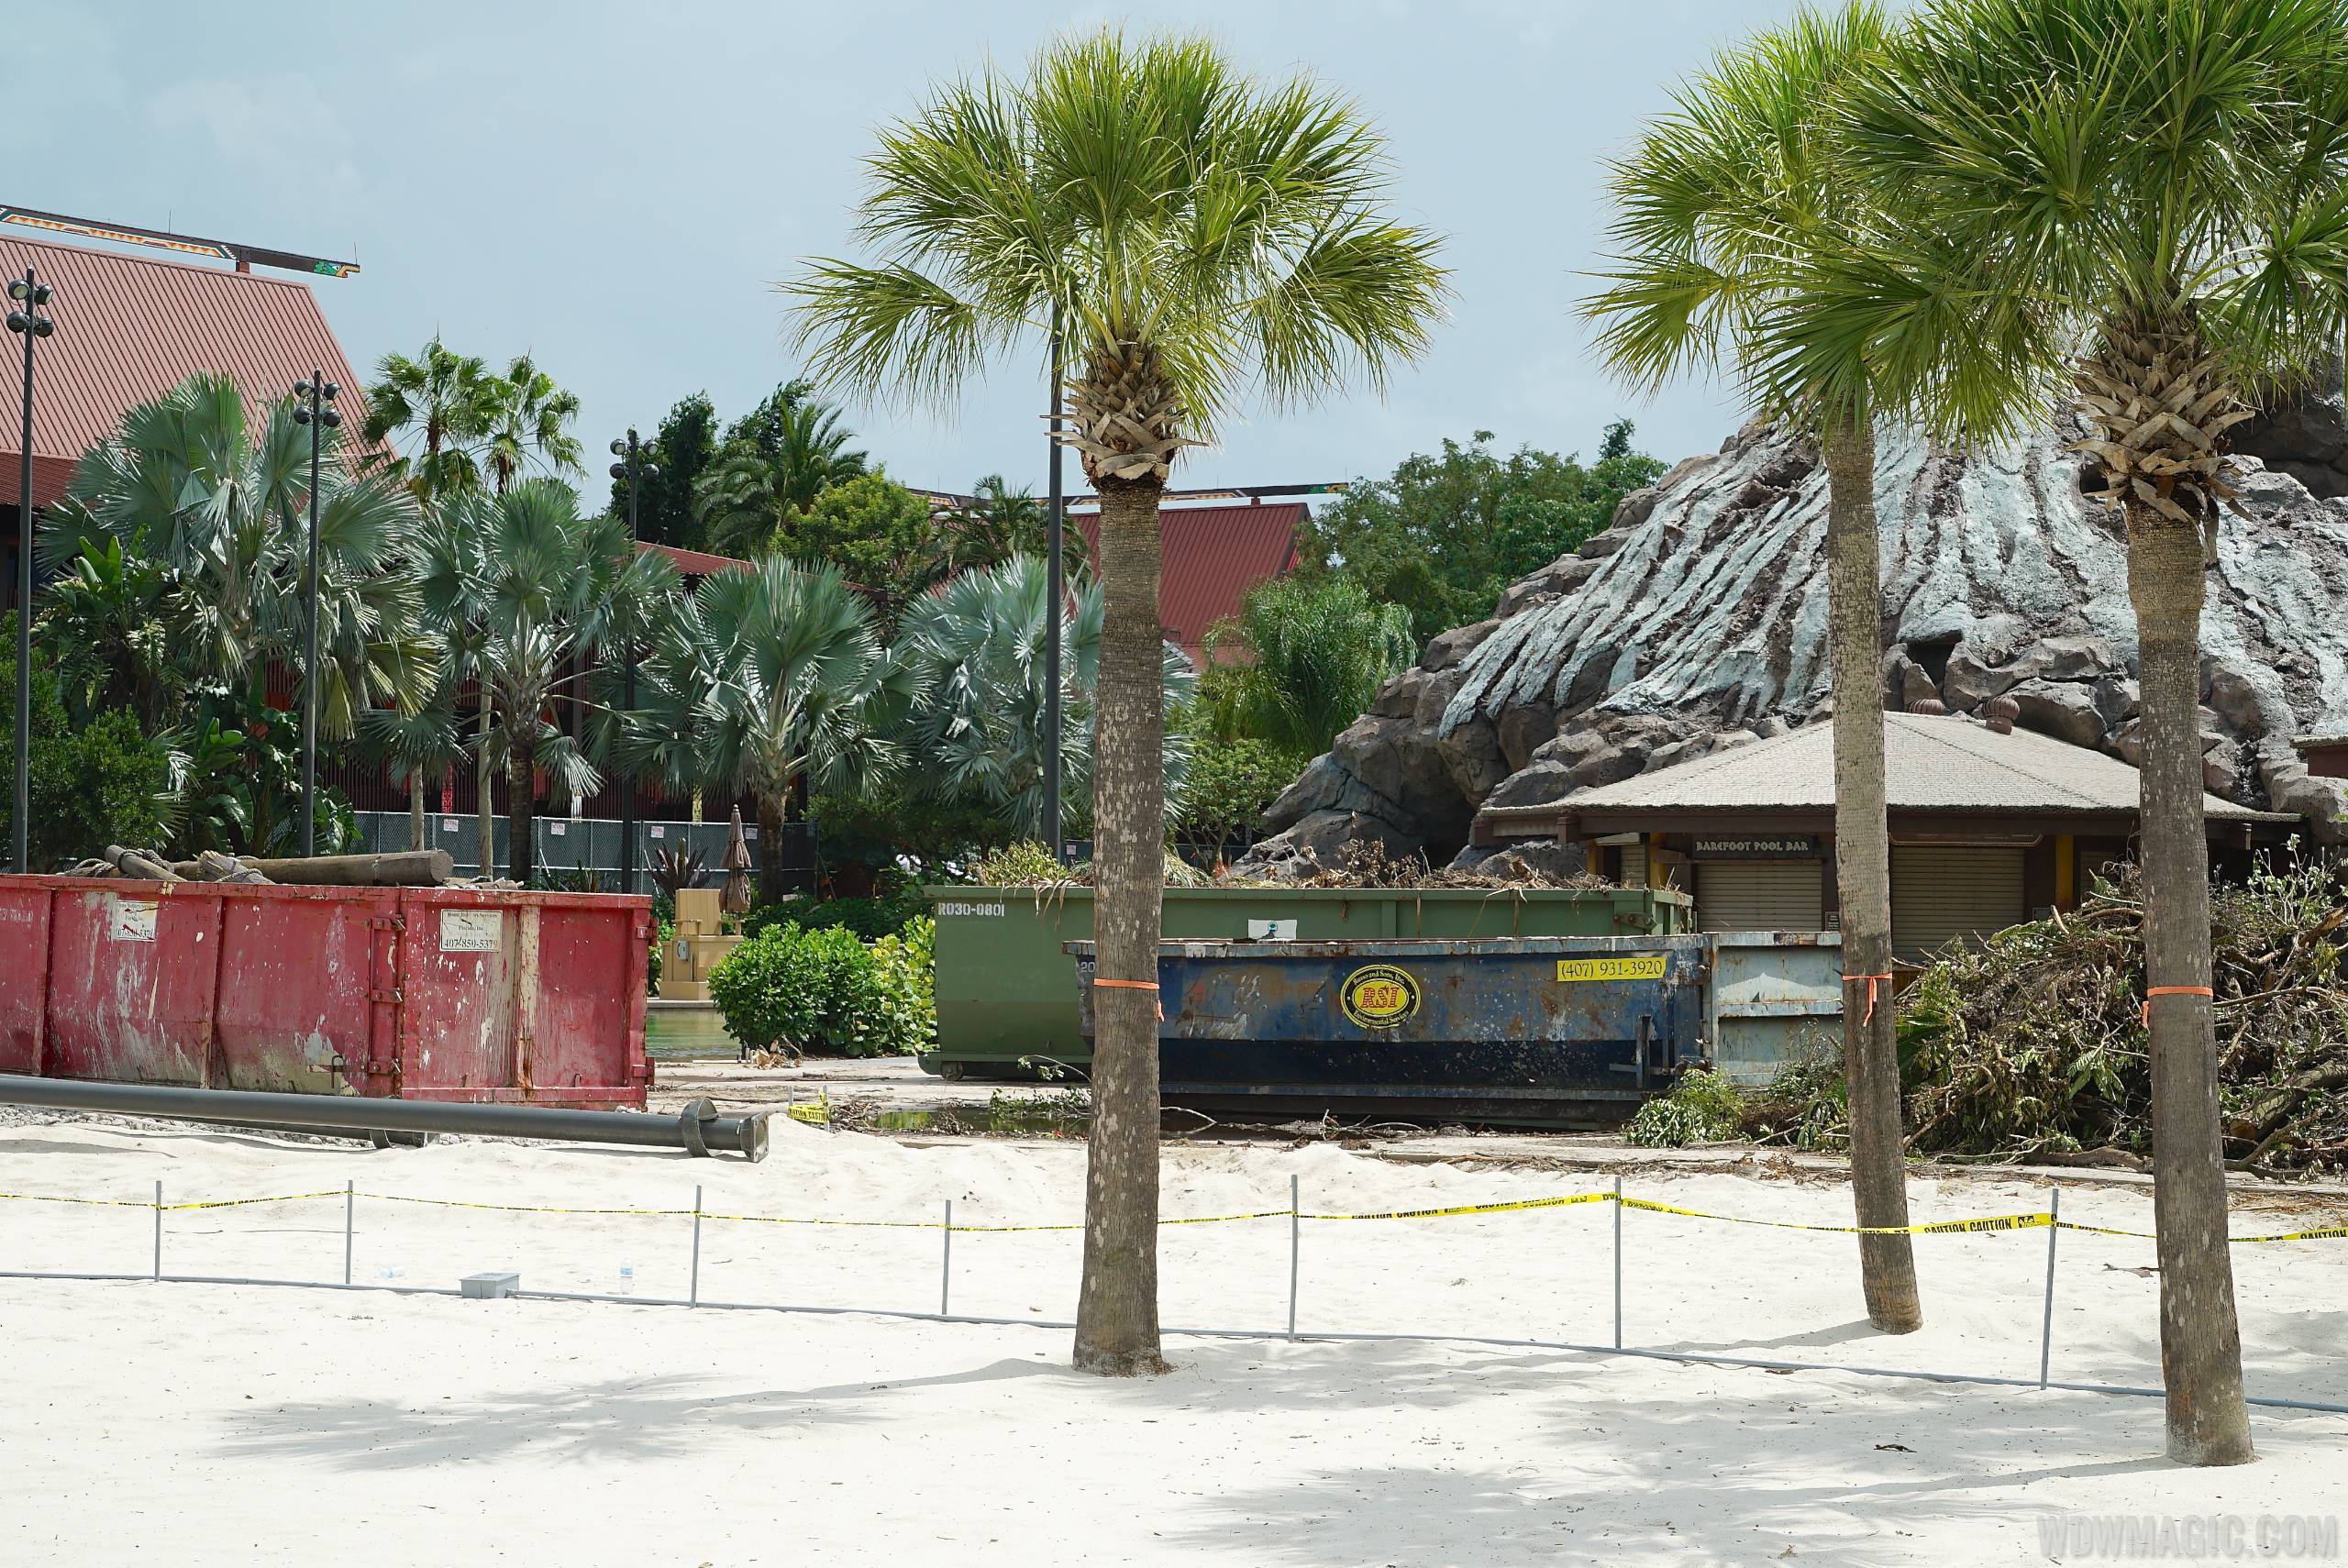 PHOTOS - A look at the construction around the main pool at Disney's Polynesian Resort